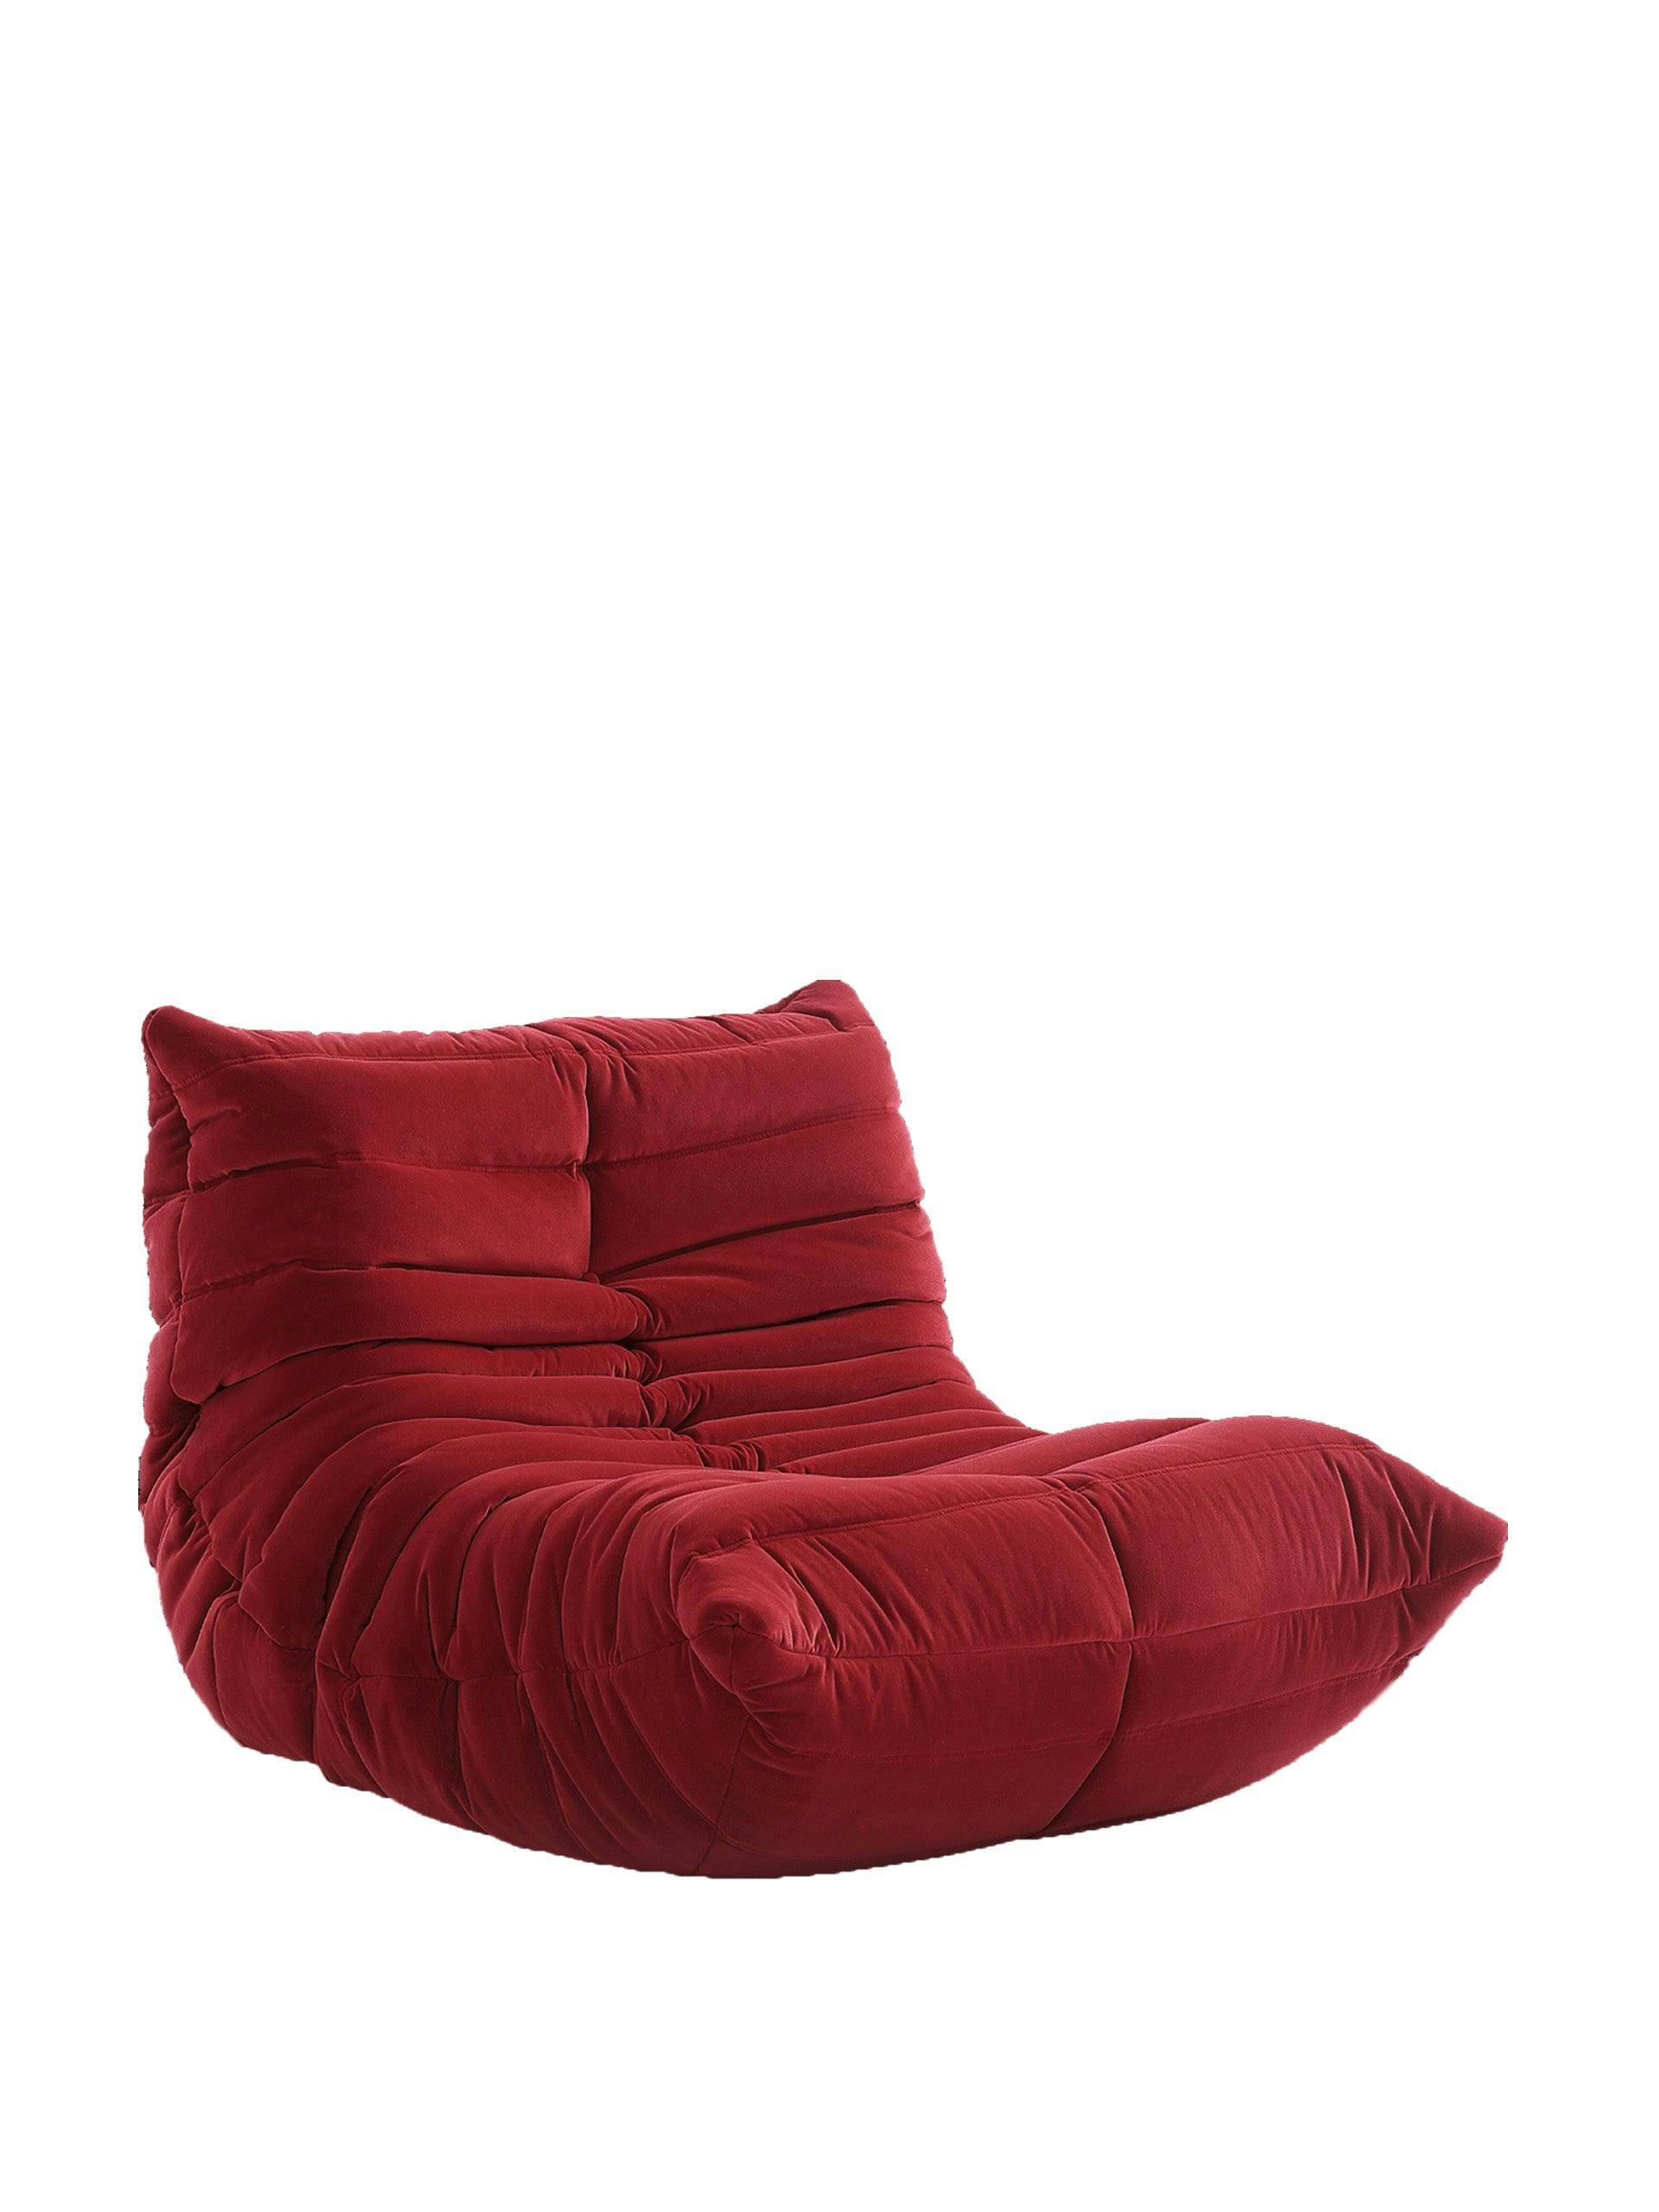 Comfort style lounge sofa